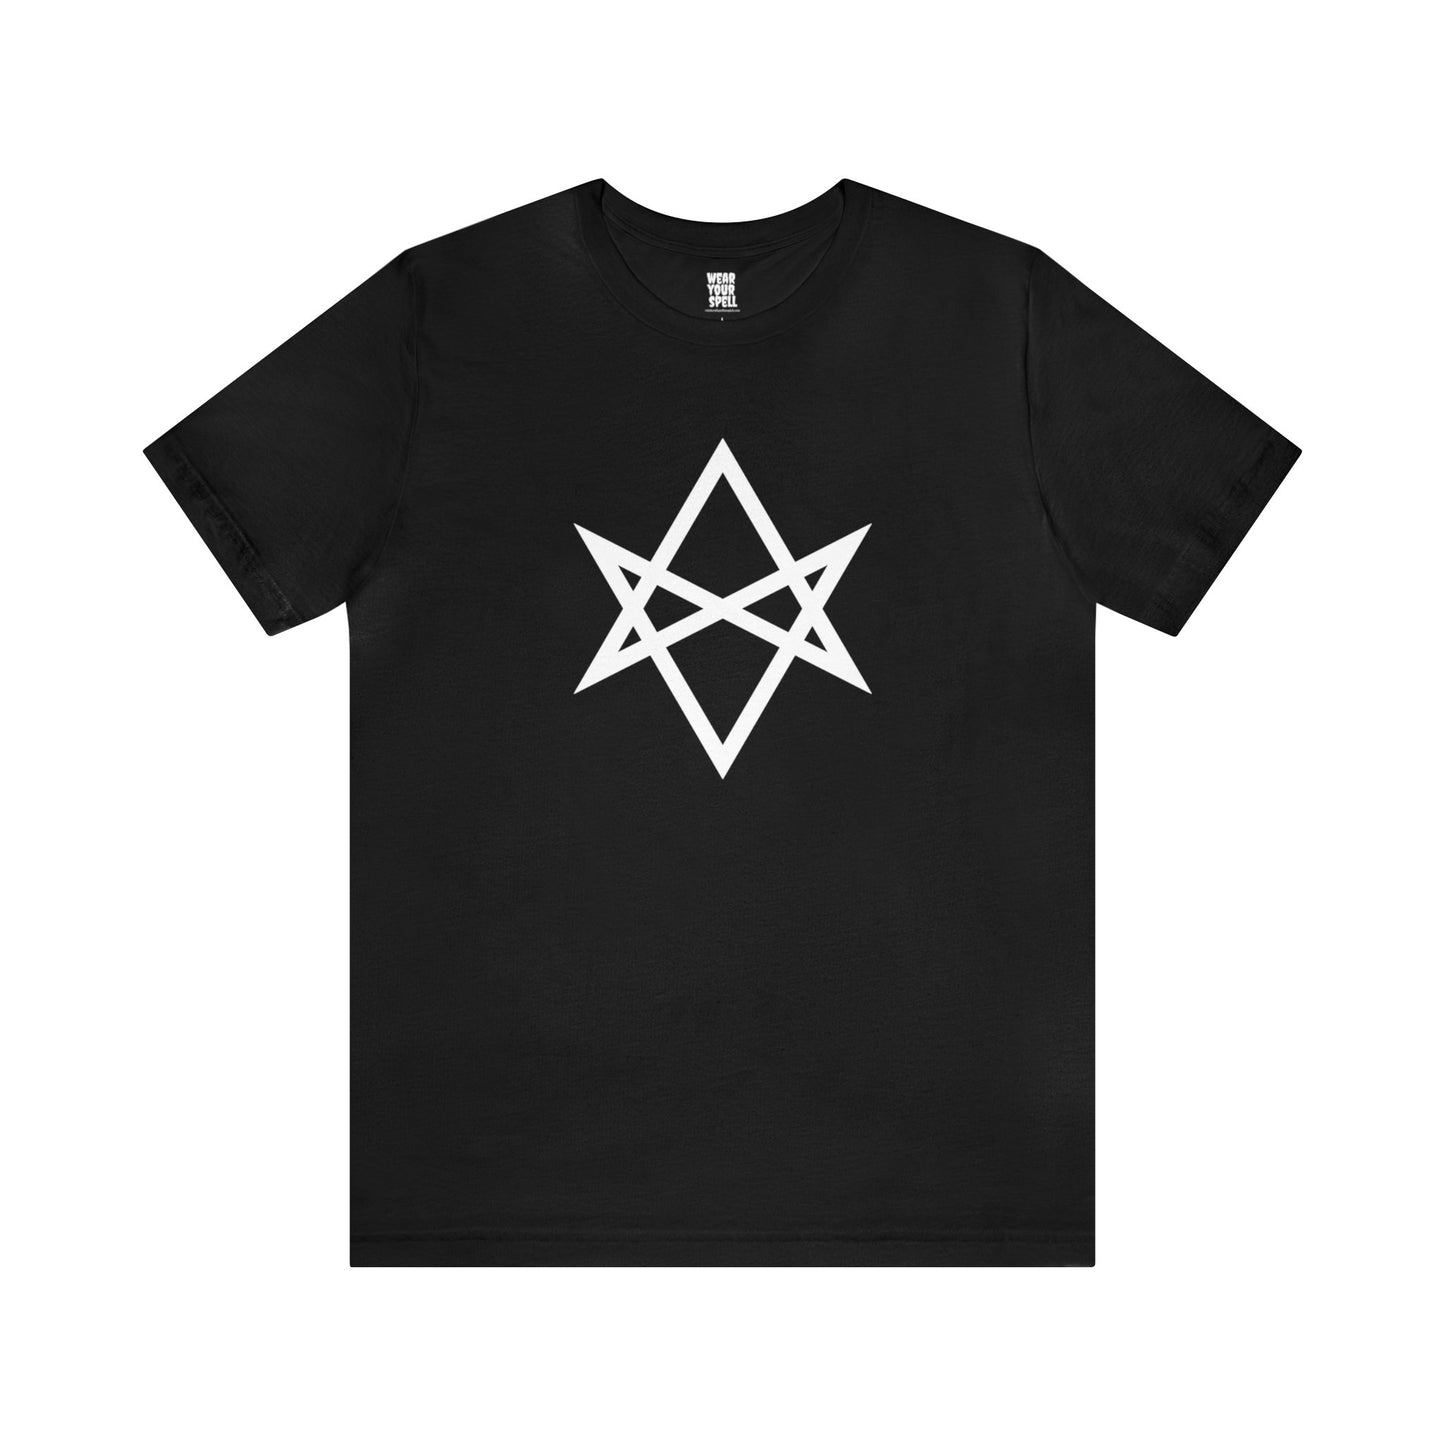 WEAR YOUR SPELL Witch T-shirt. Ward Off Negativity Spell. Magickal correspondence: Hexagram Sigil, Black Obsidian & Rosemary